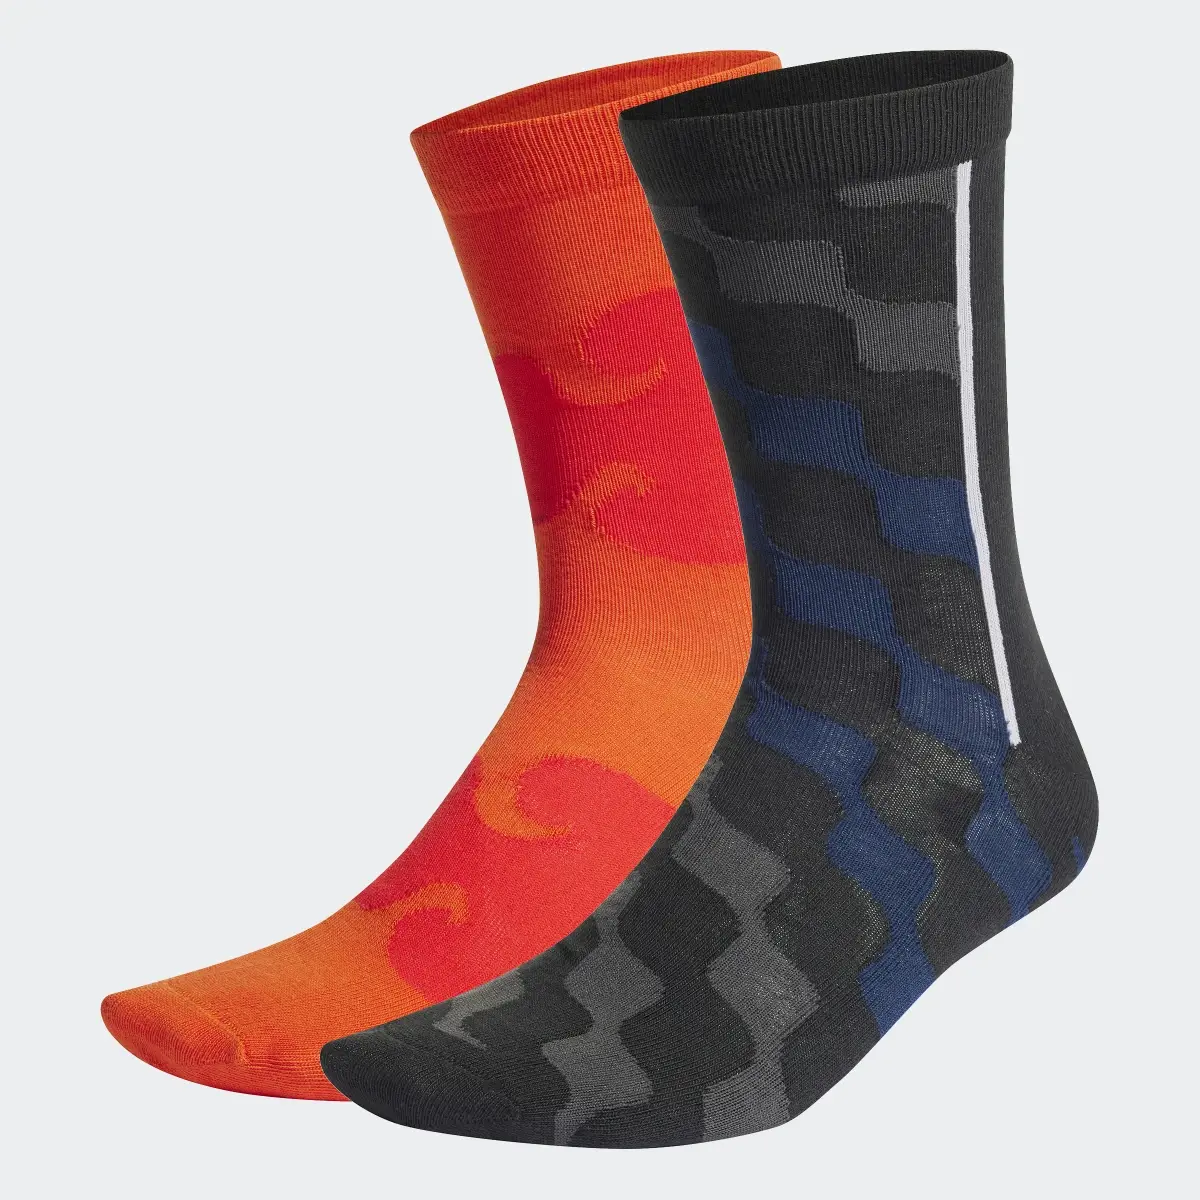 Adidas Marimekko Socks 2 Pairs. 1